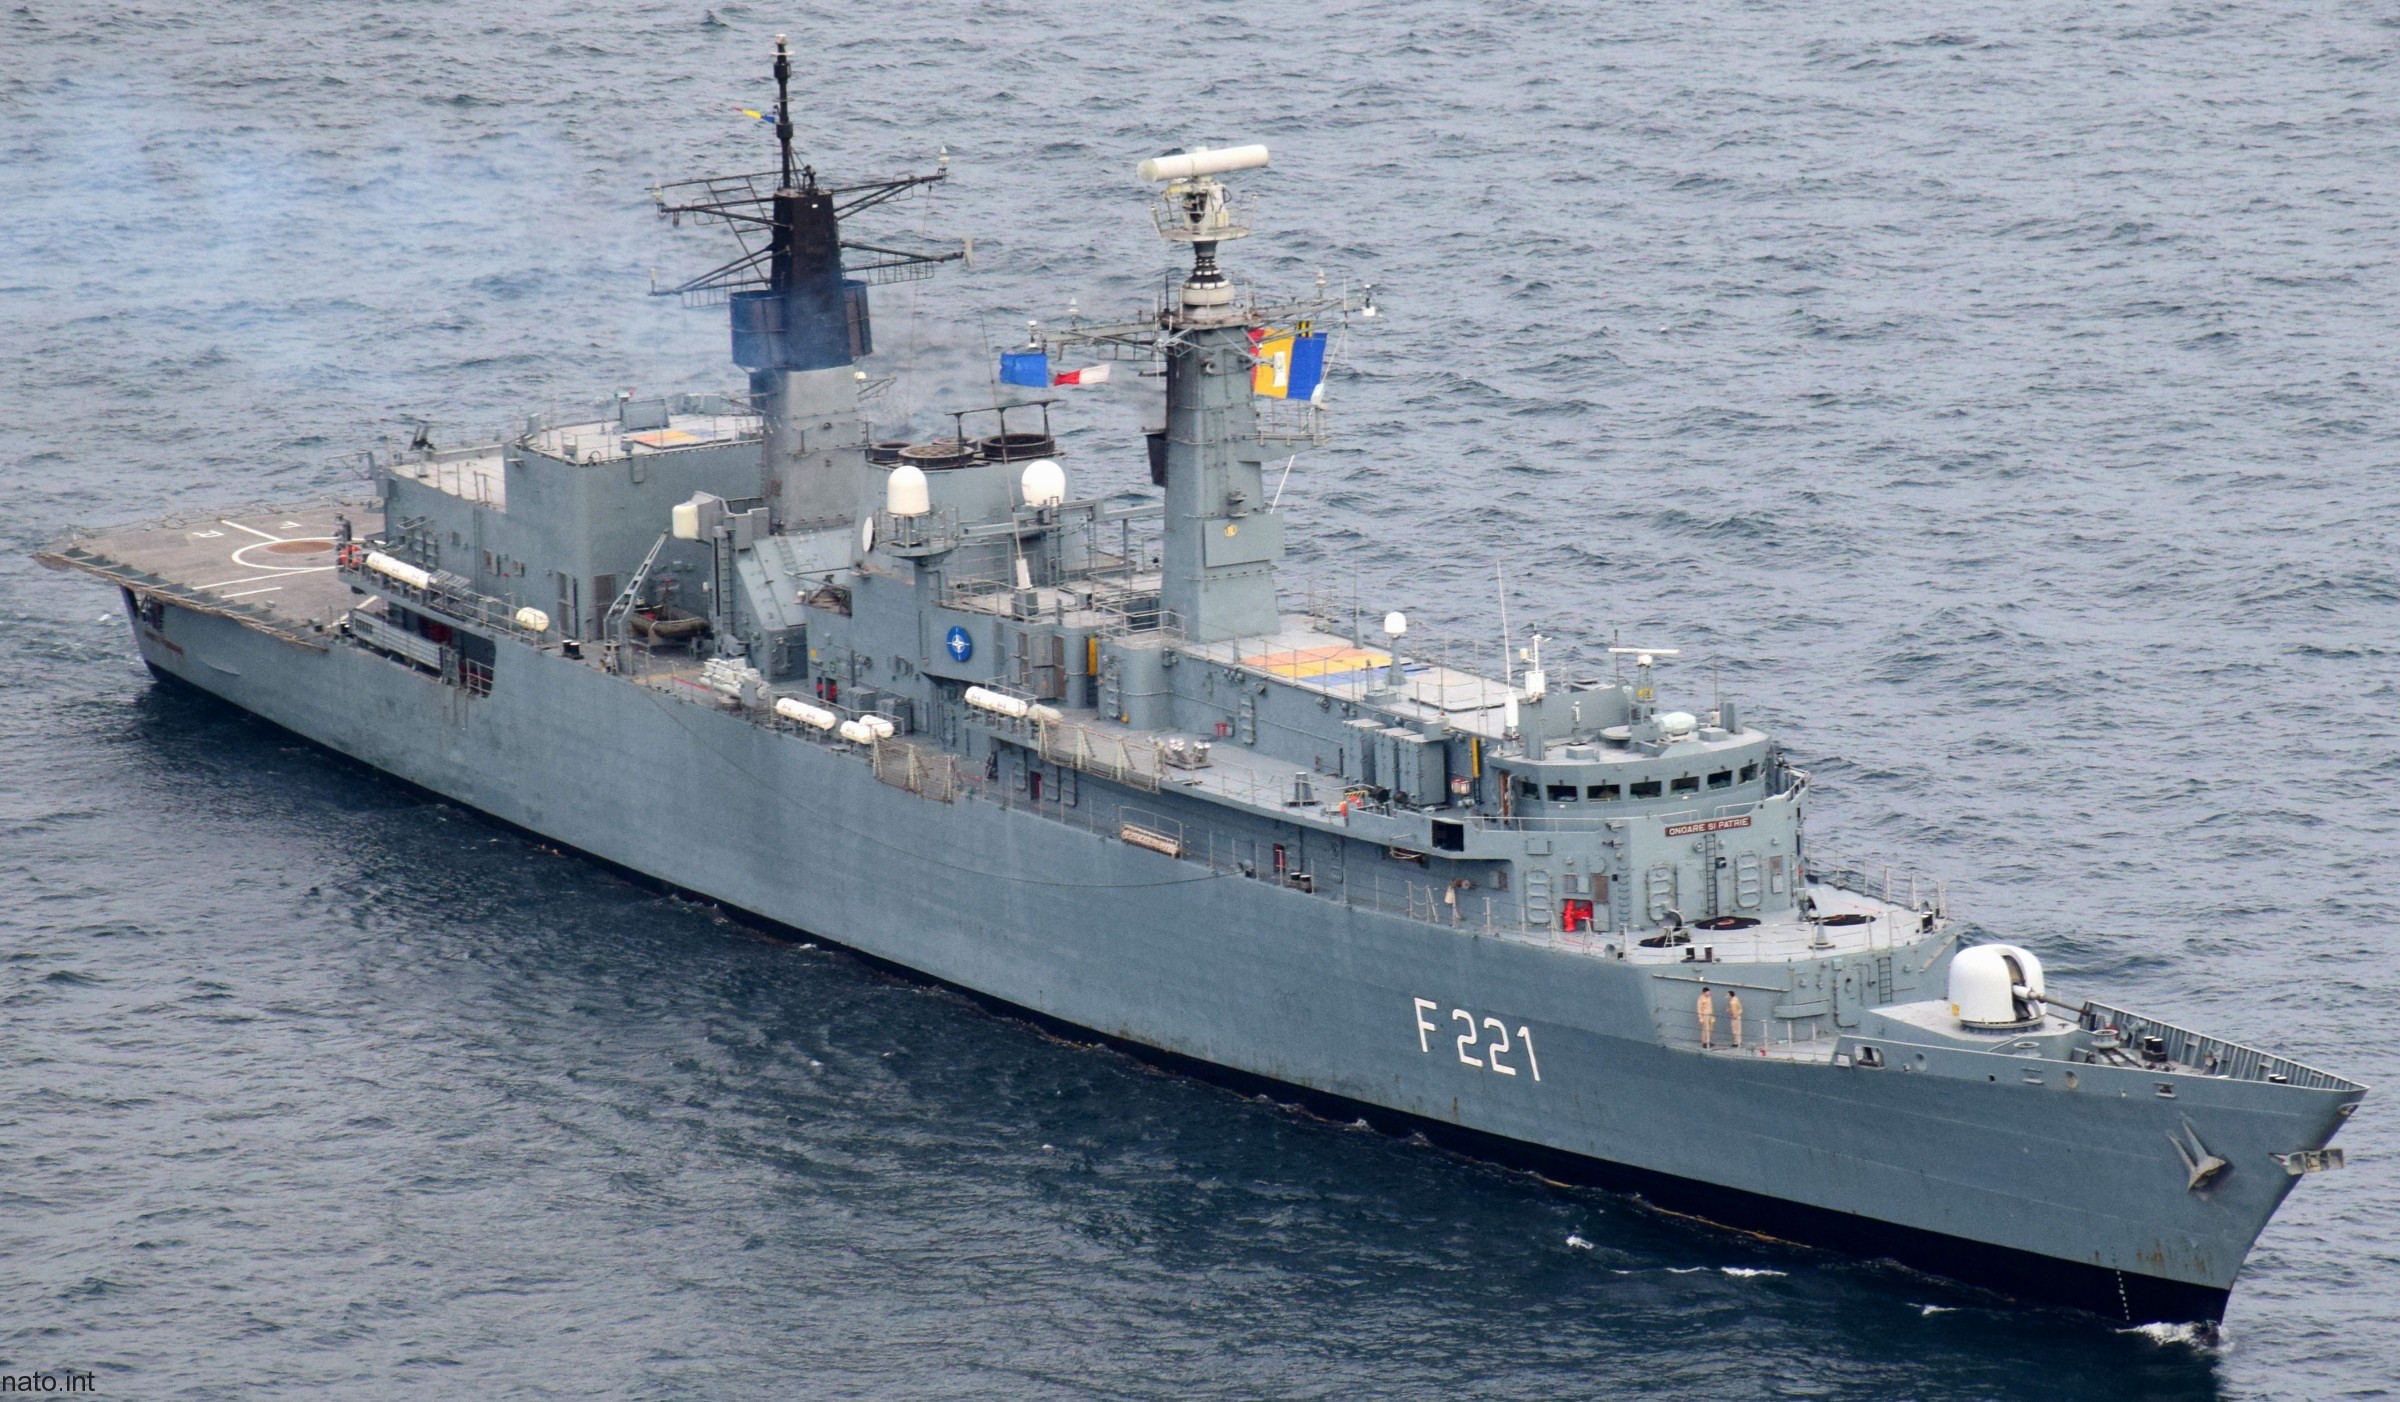 f-221 ros regele ferdinand frigate romanian navy type 22 broadsword class 11